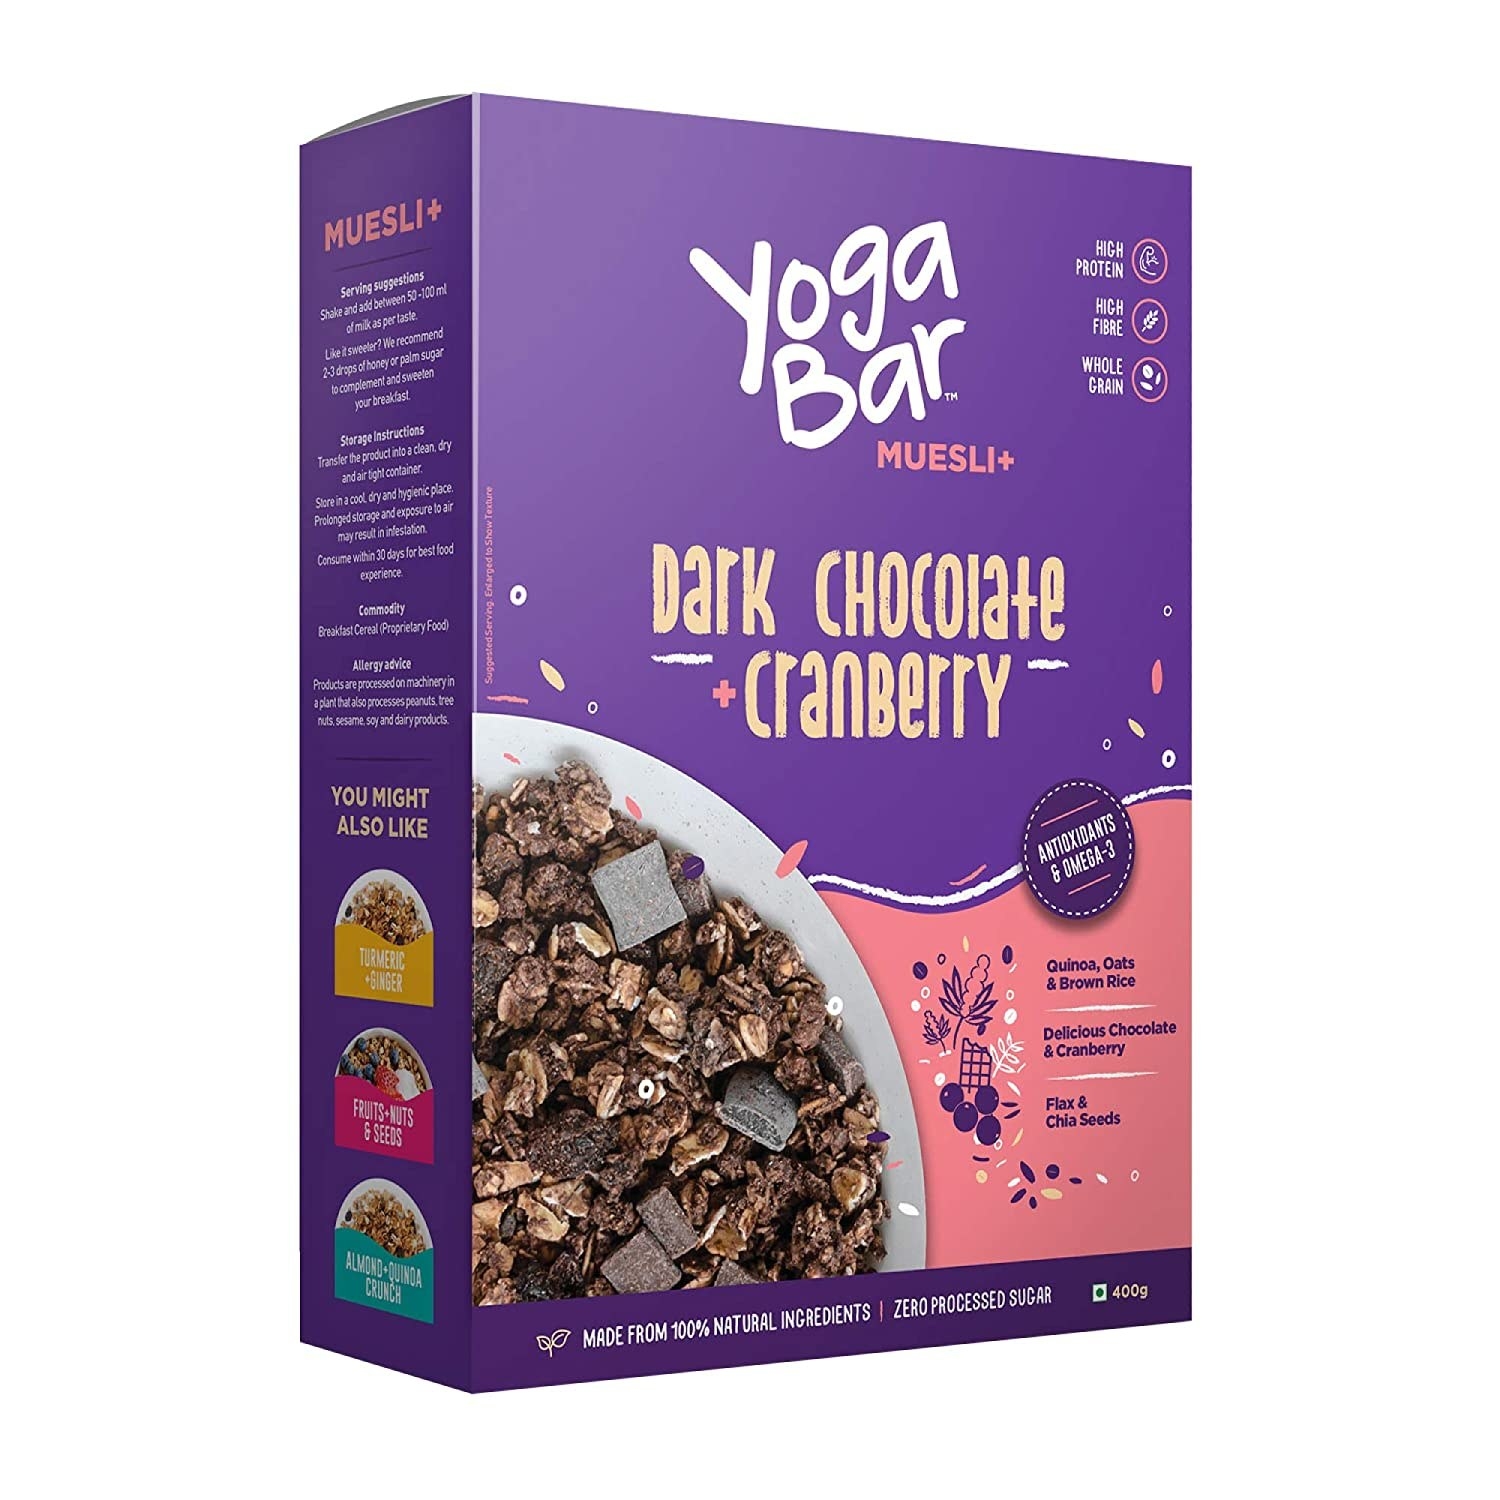 Yogabar Almond Quinoa Crunchy Muesli Box Price in India - Buy Yogabar  Almond Quinoa Crunchy Muesli Box online at